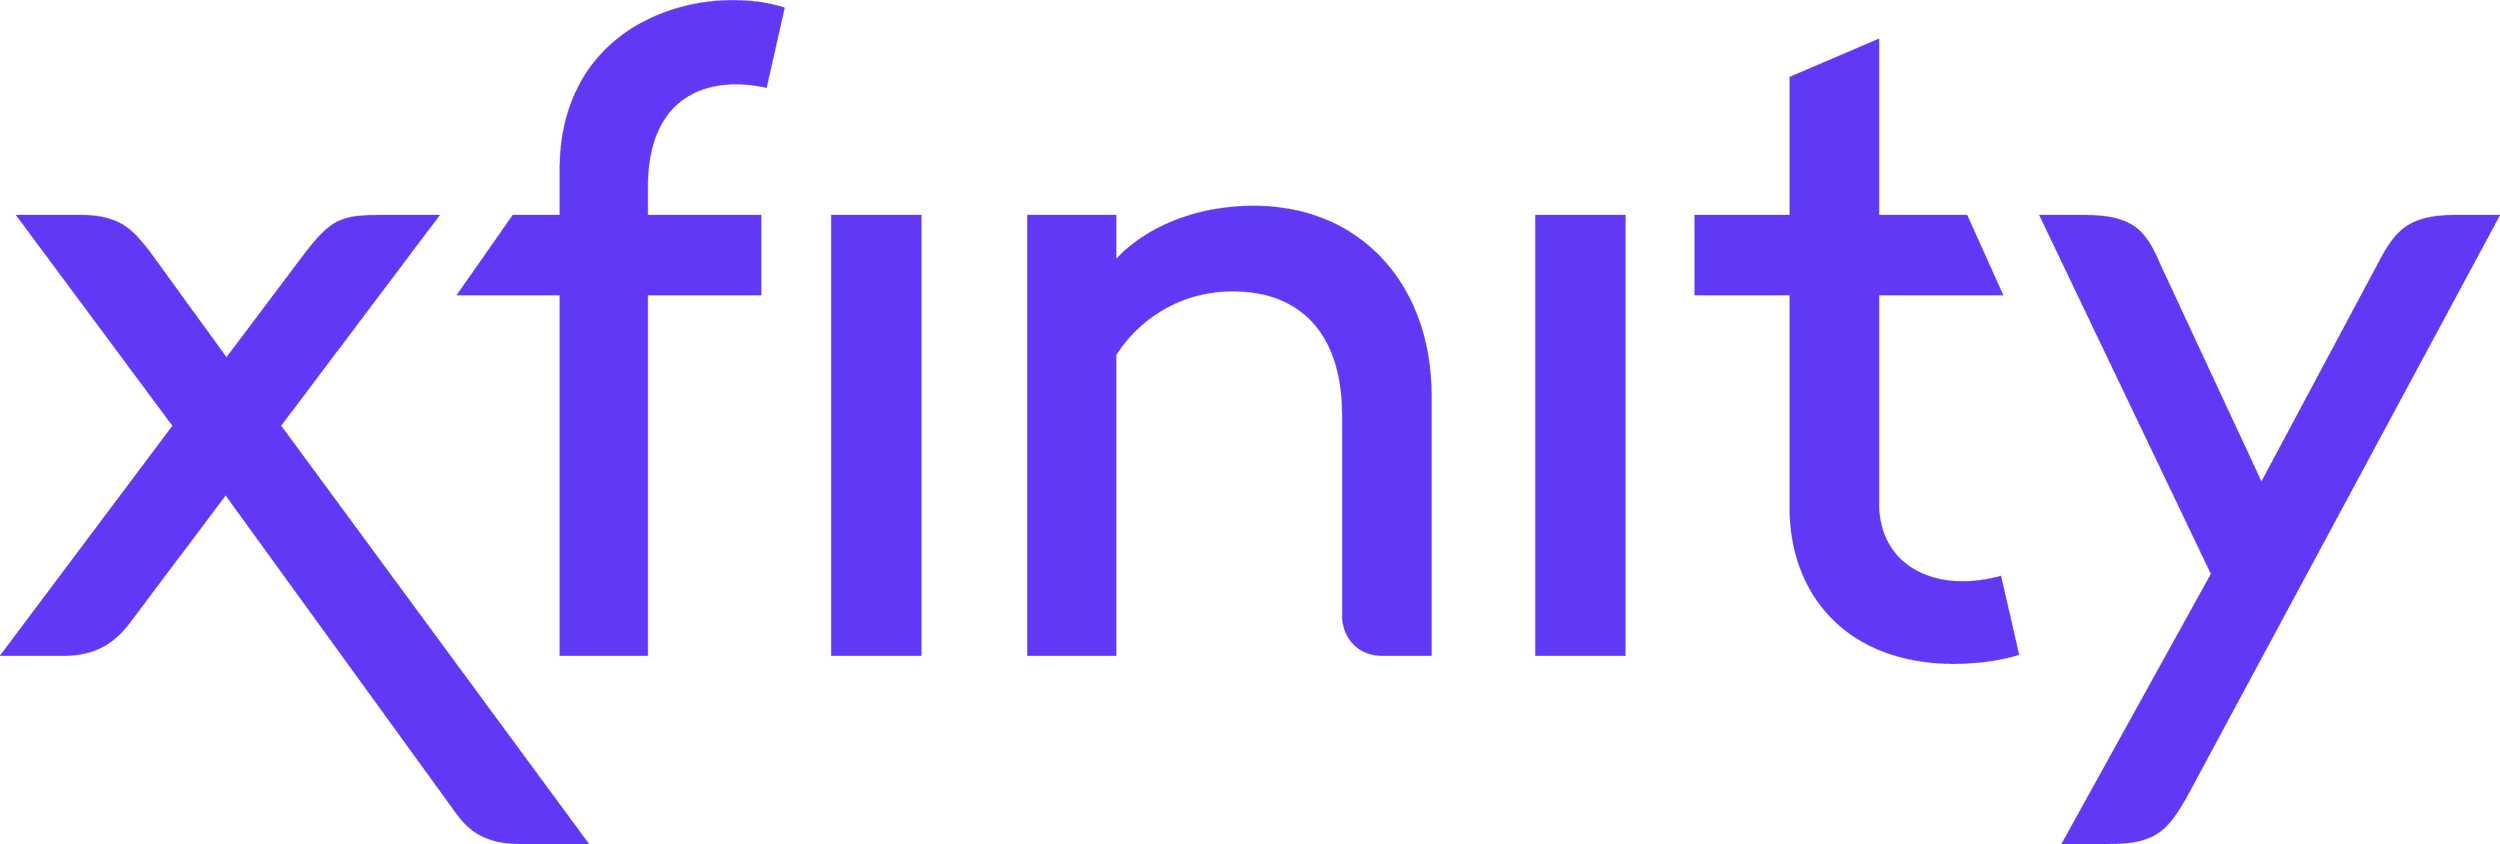 Xfinity_logo_PNG3.png